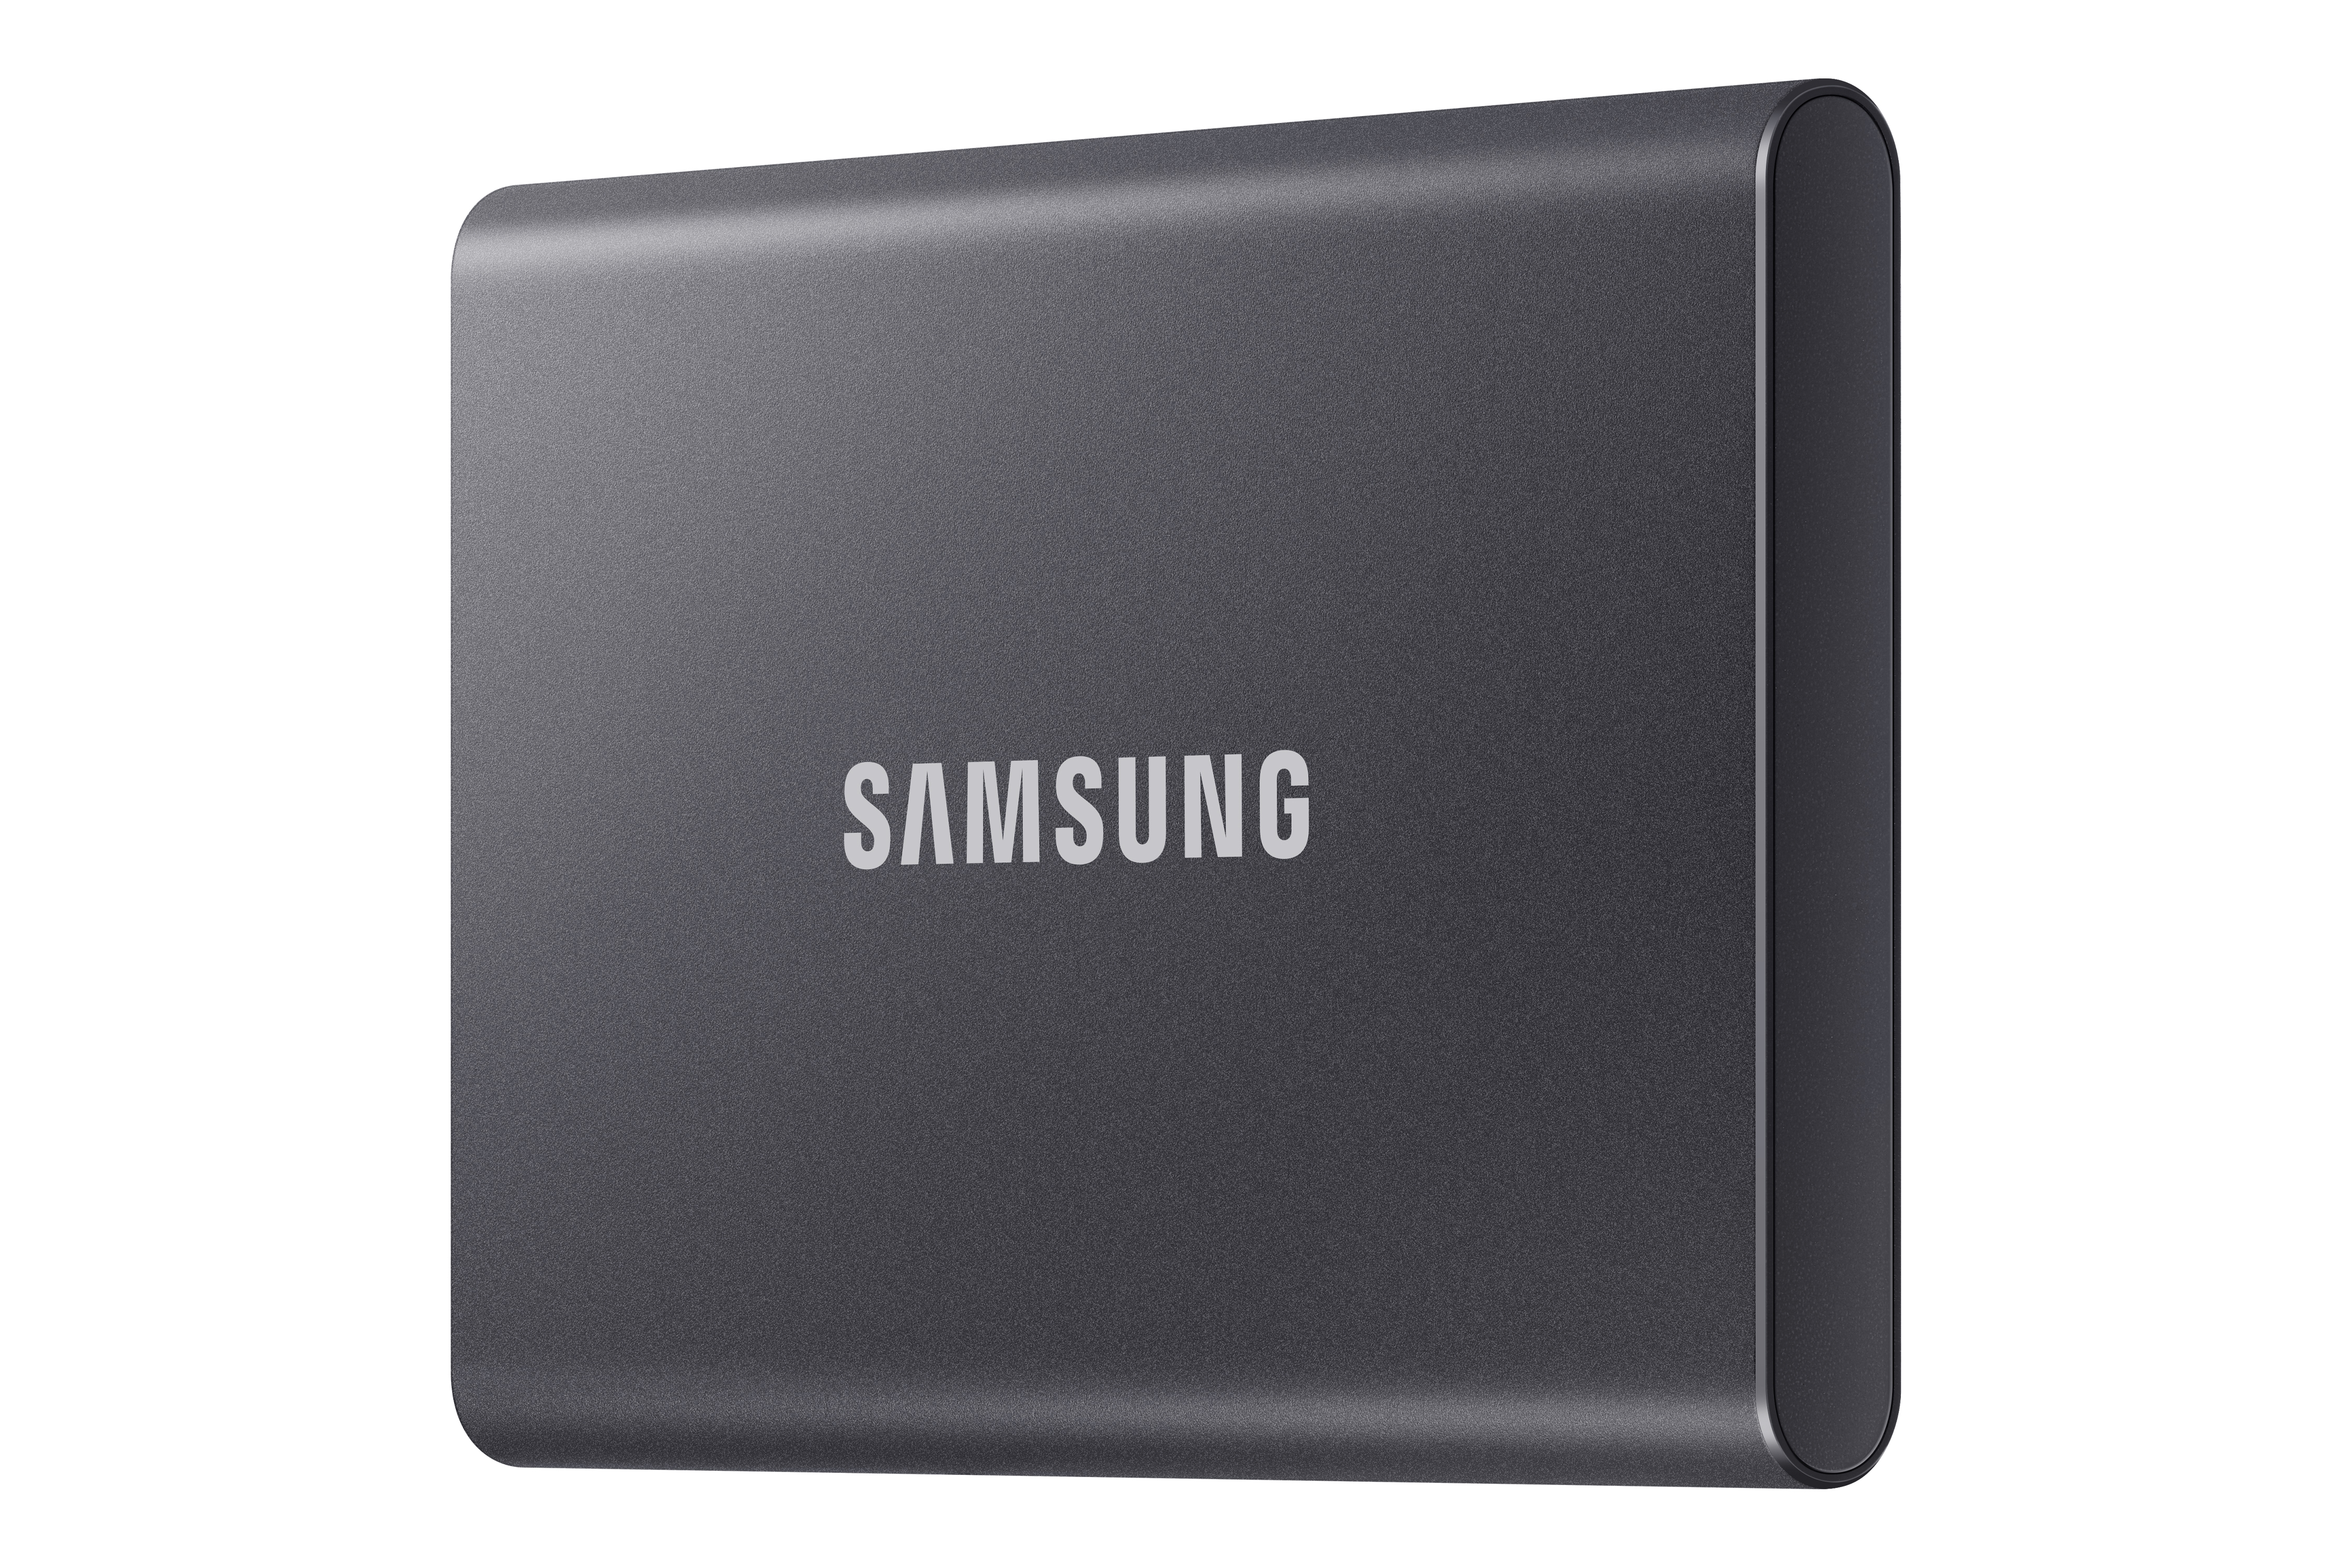 Portable SSD T7 USB 3.2 1TB (Gray) Memory & Storage - MU-PC1T0T/AM 